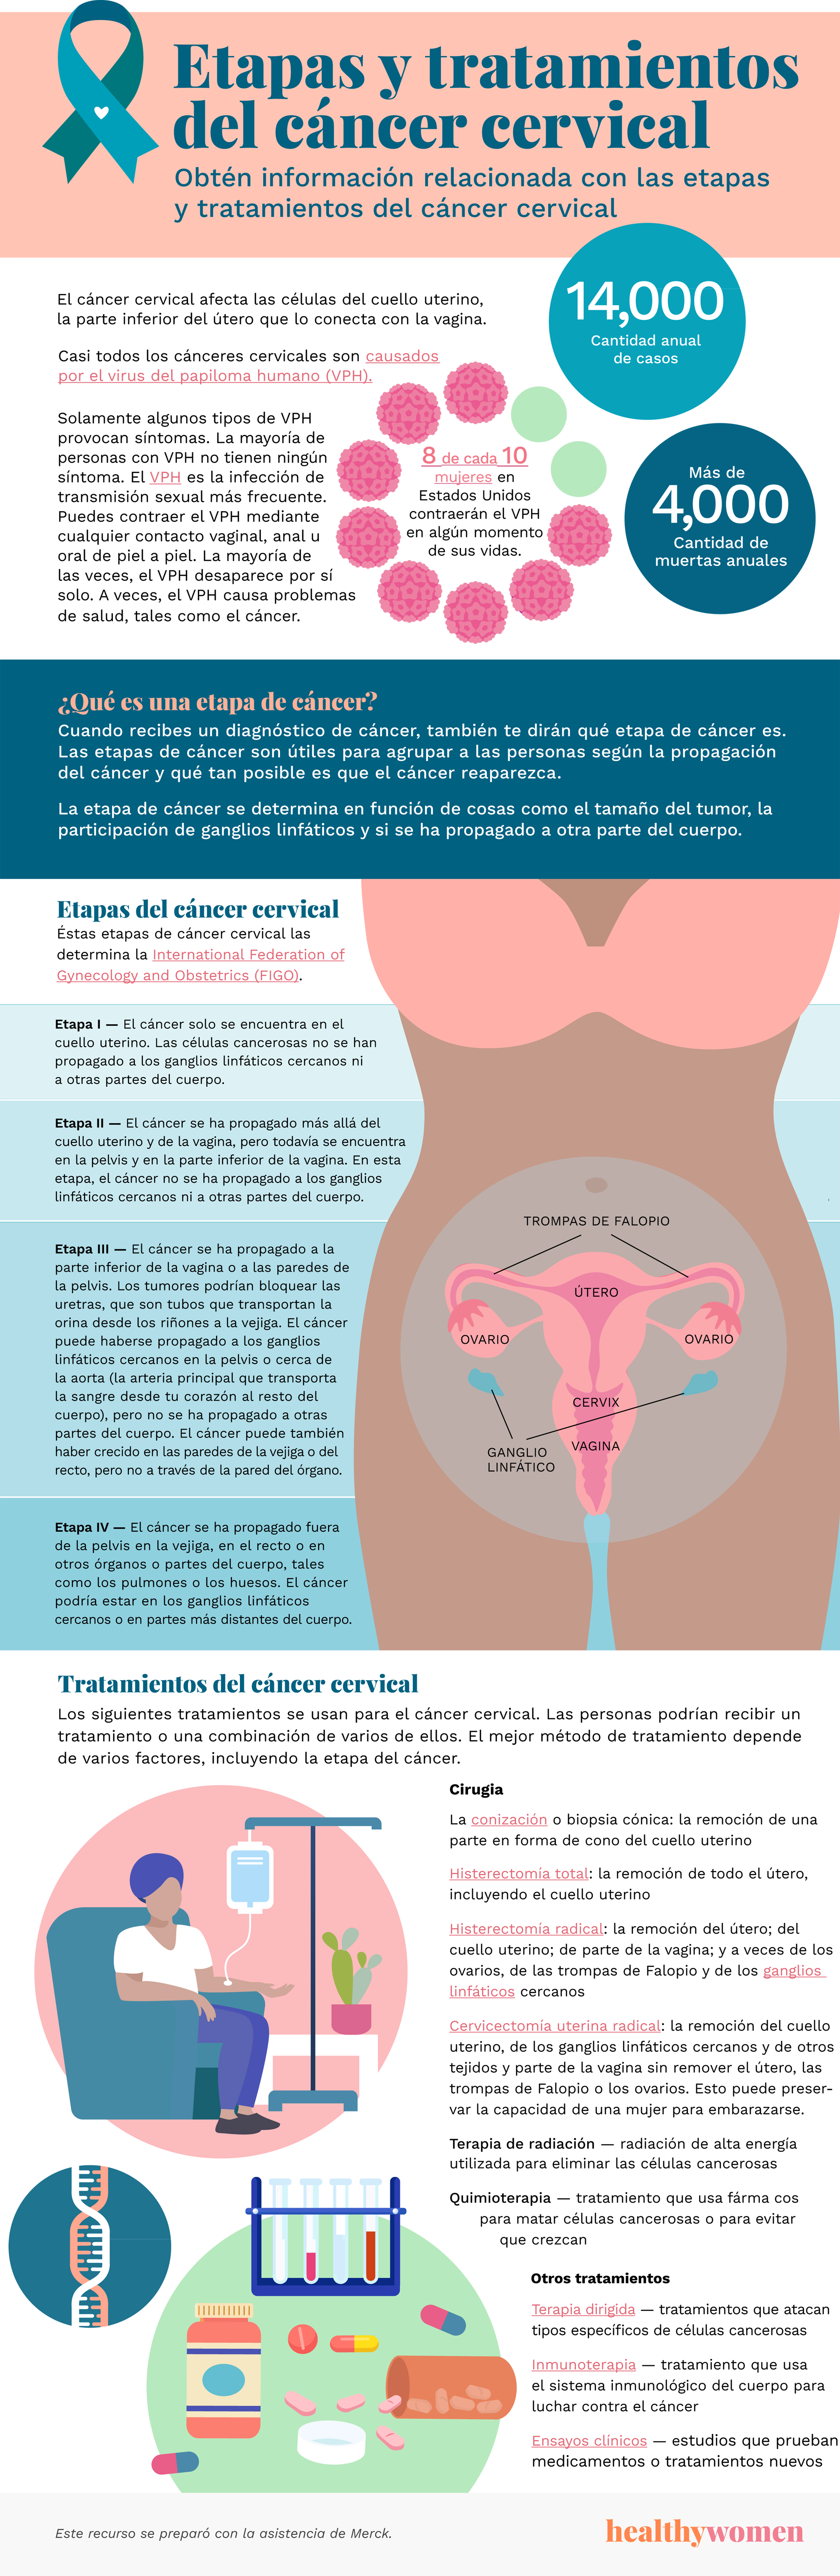 Infographic Etapas y tratamientos del cu00e1ncer cervical. Click the image to open the PDF